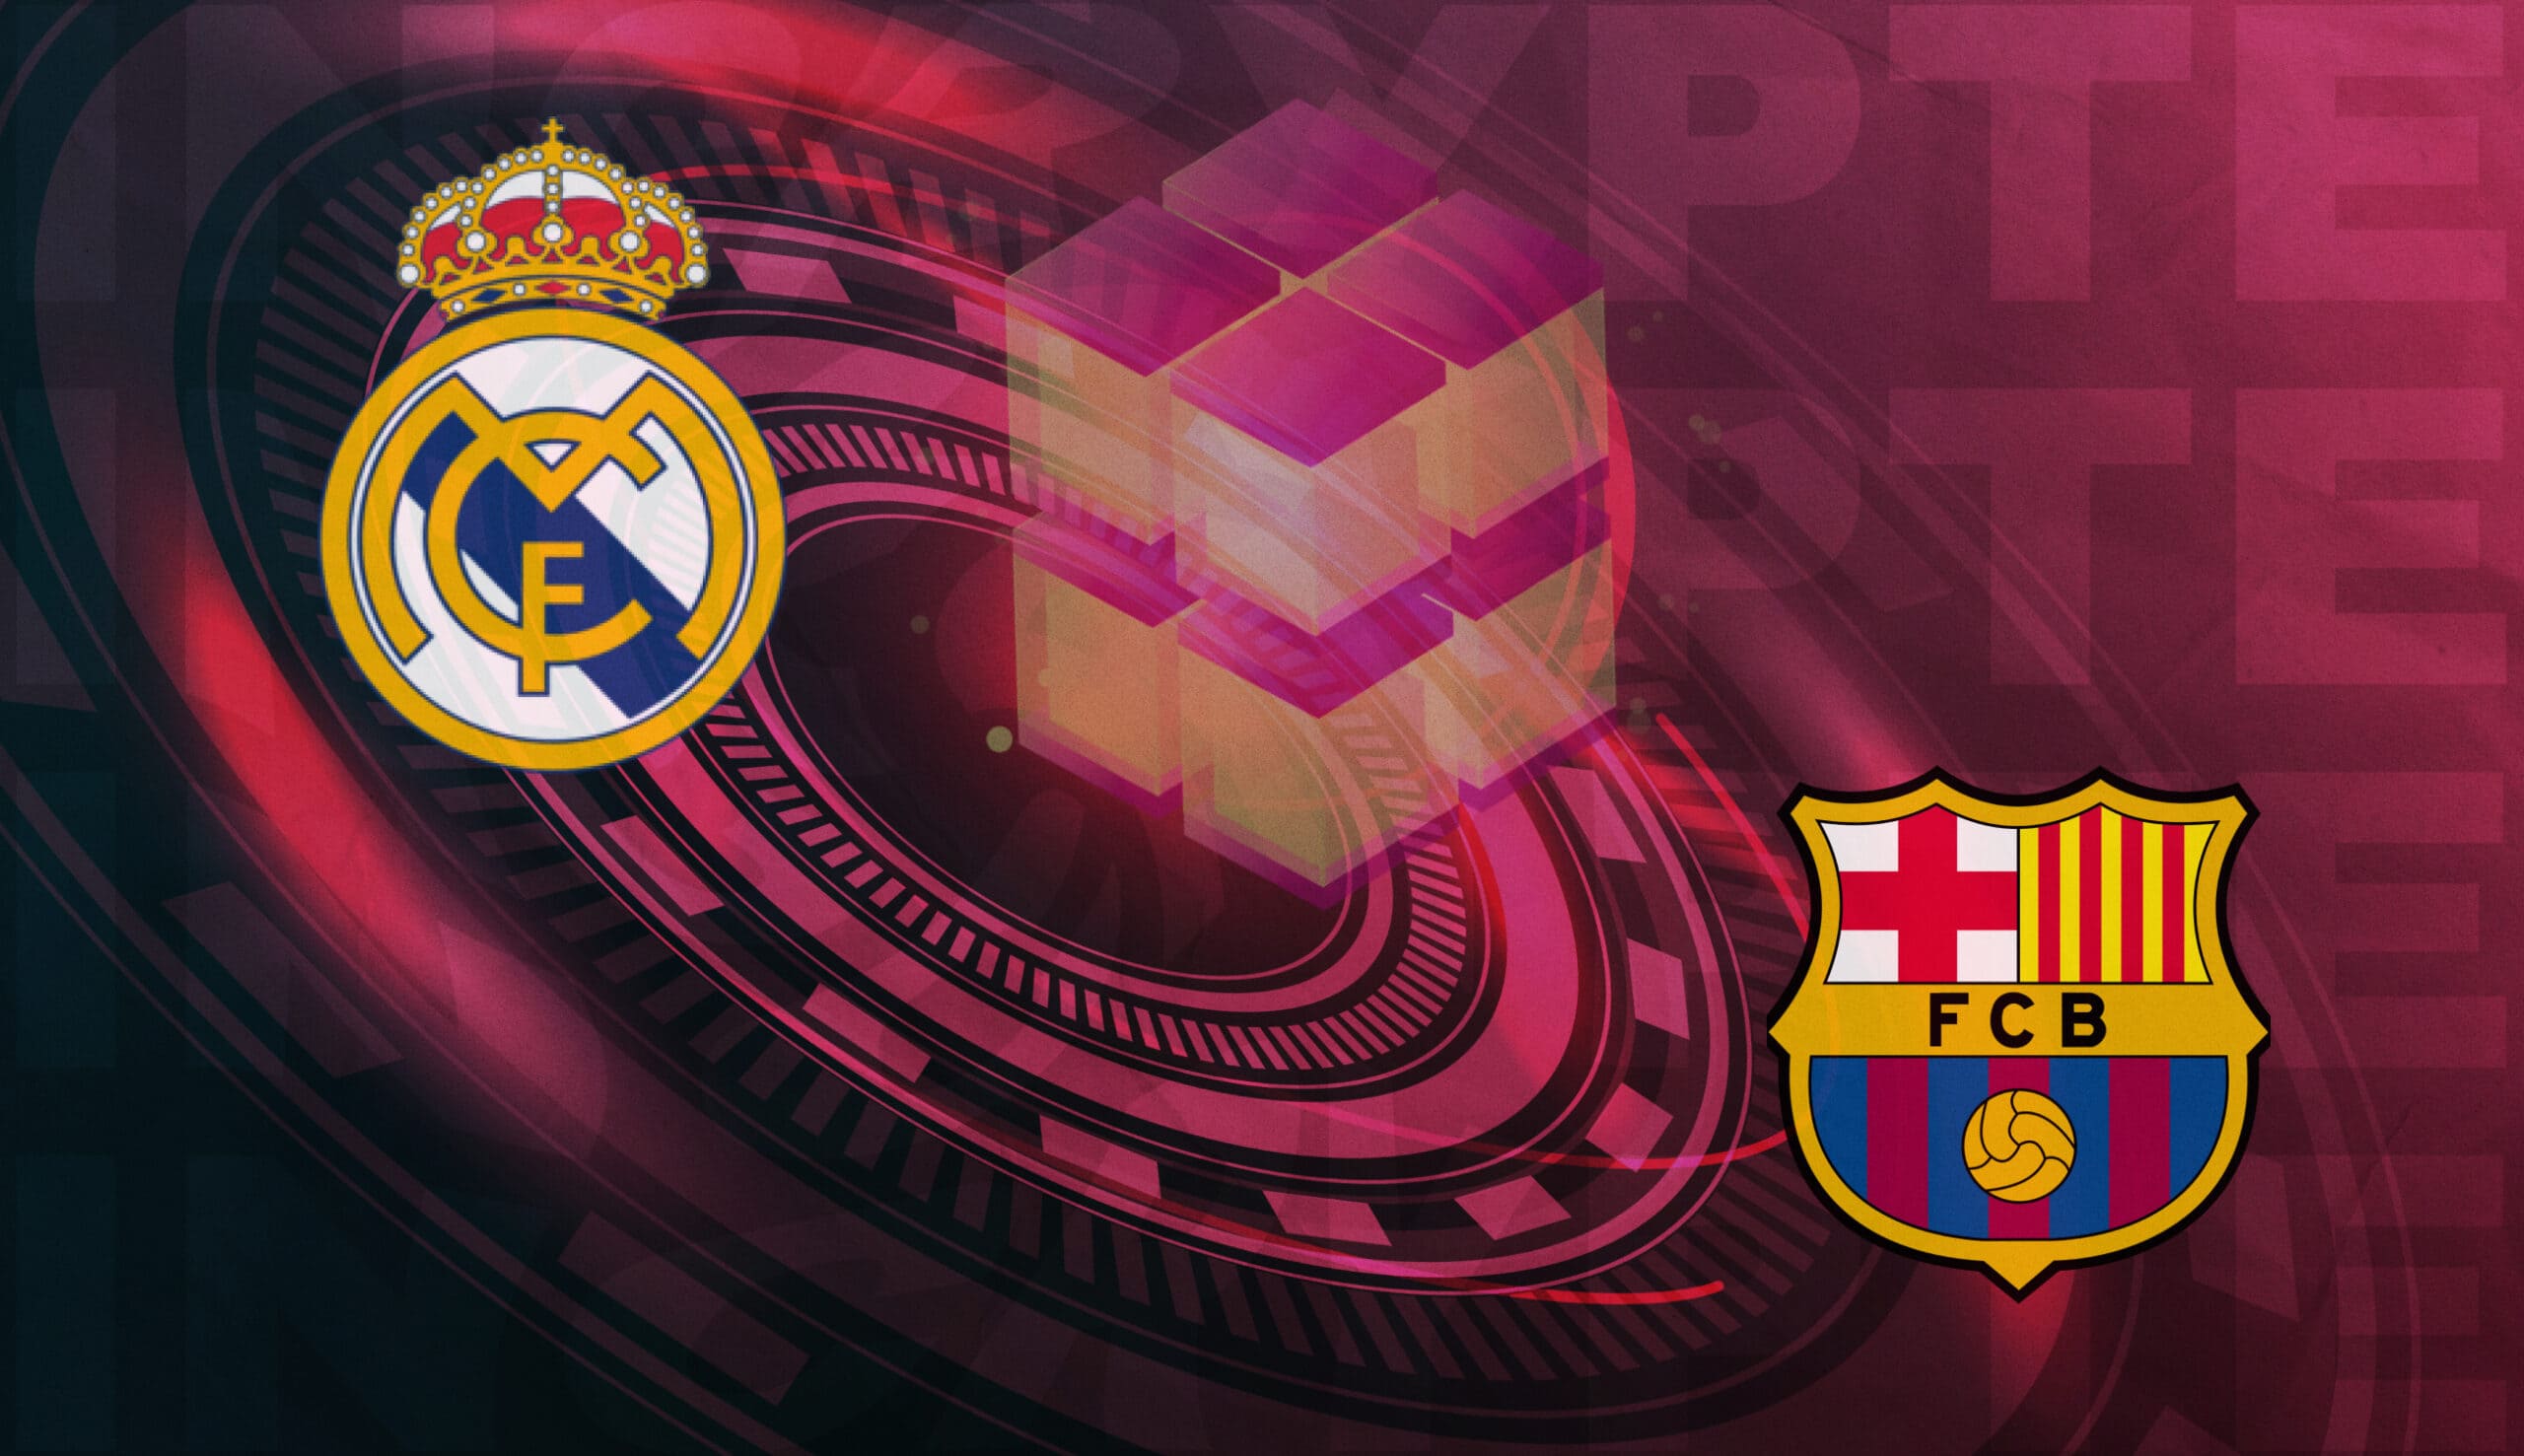 роект “Барселоны” и “Реал Мадрида” нацелен на Metaverse и сферу цифровых активов.